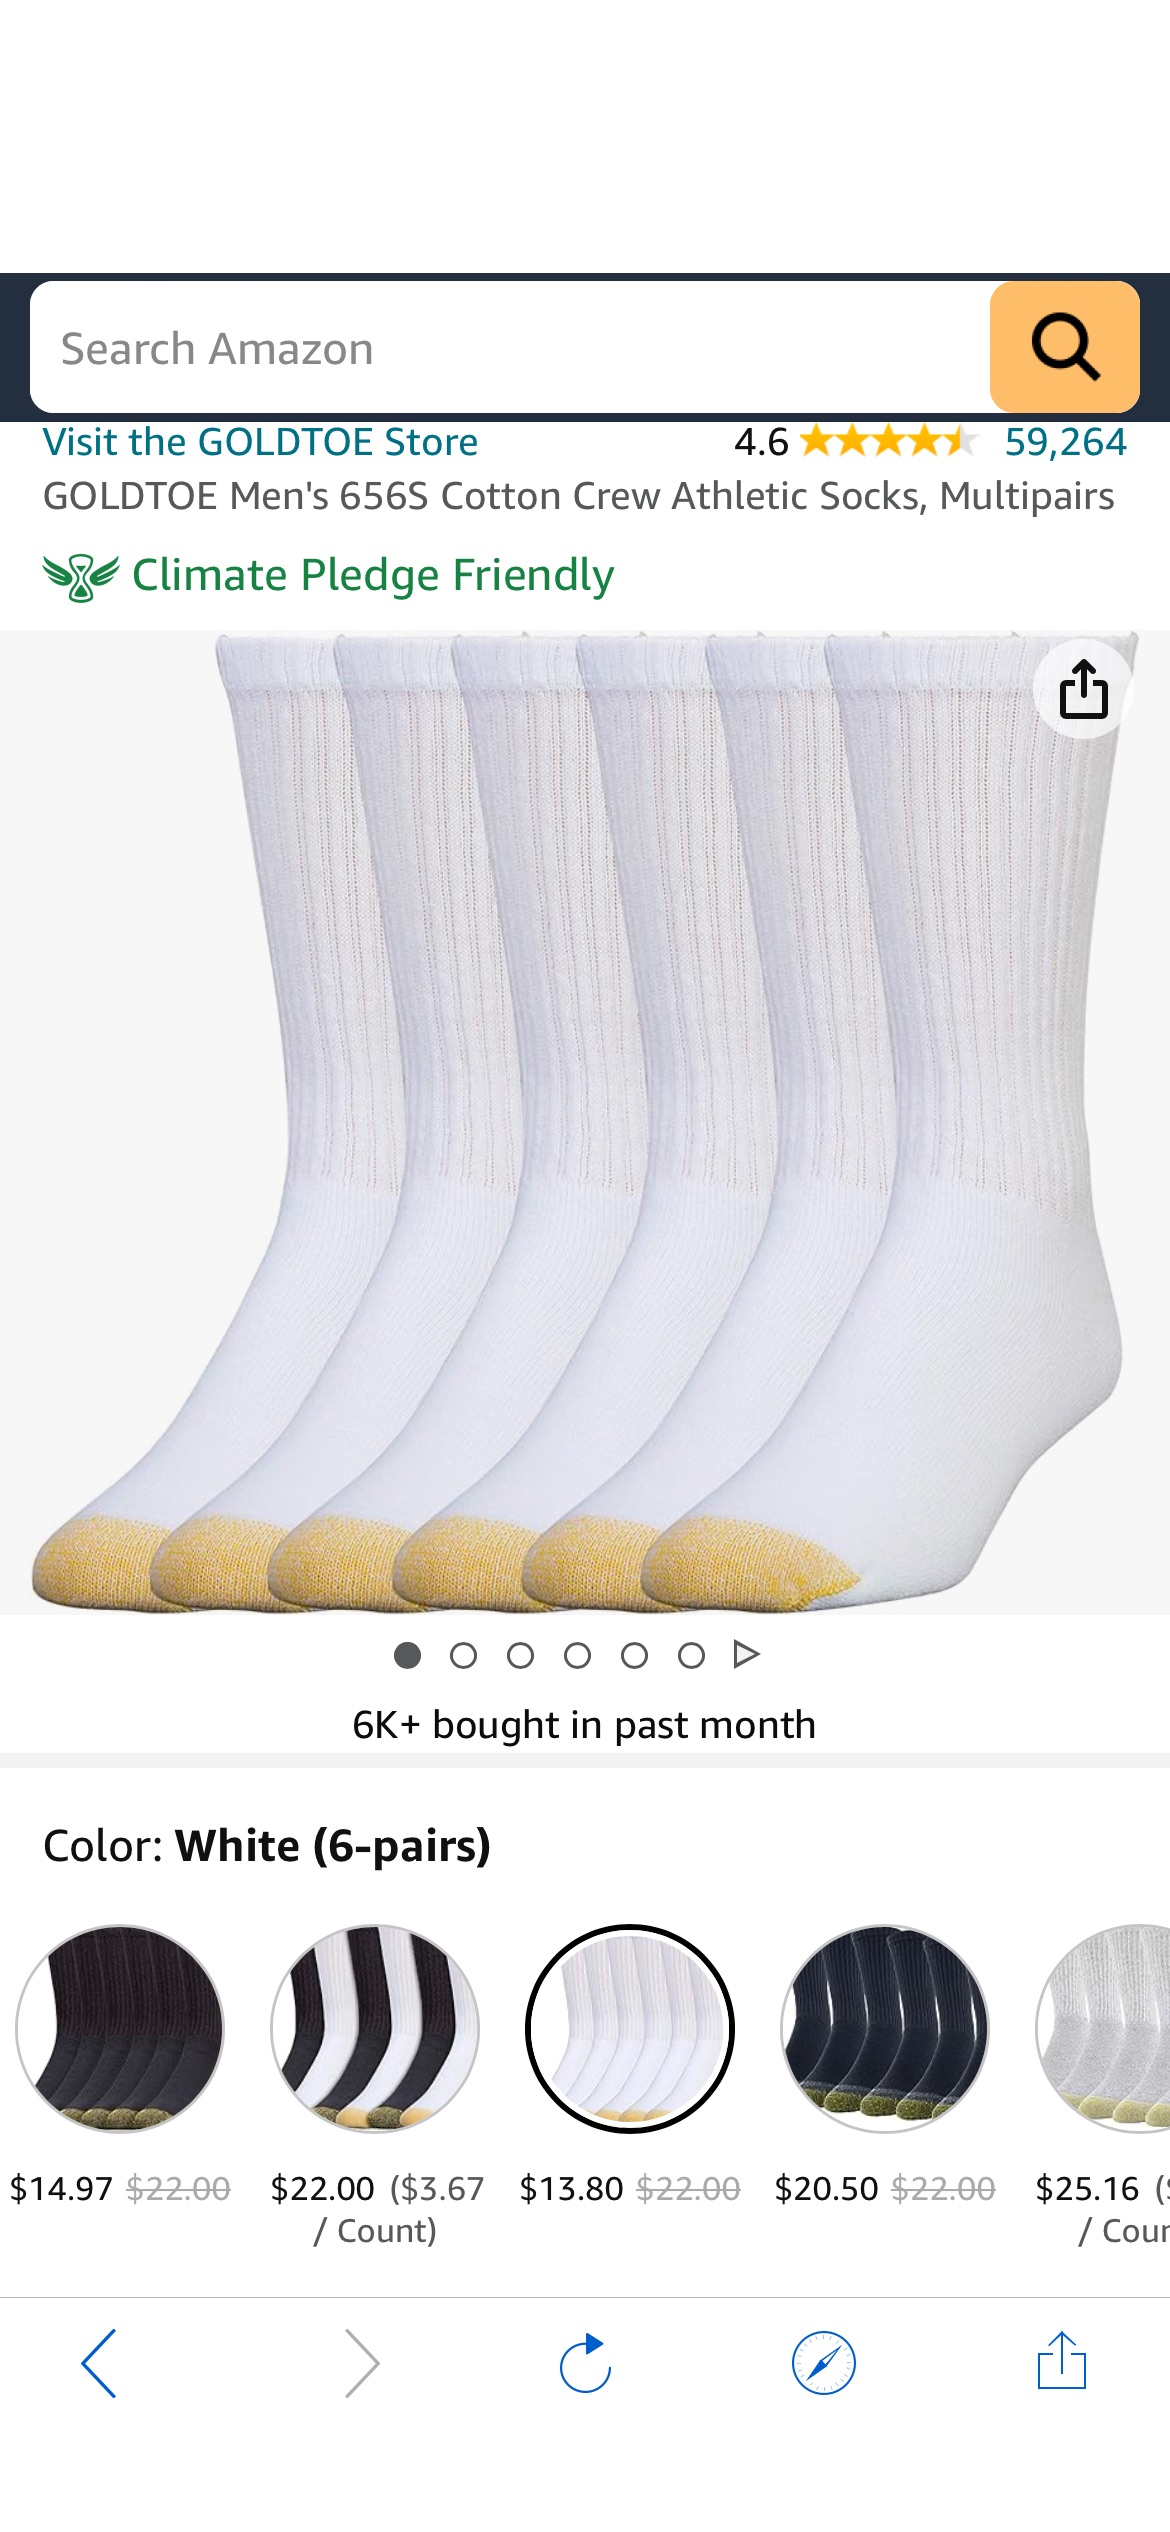 Amazon.com: GOLDTOE Men's 656s Cotton Crew Athletic Socks, Multipairs, White (6-Pairs)